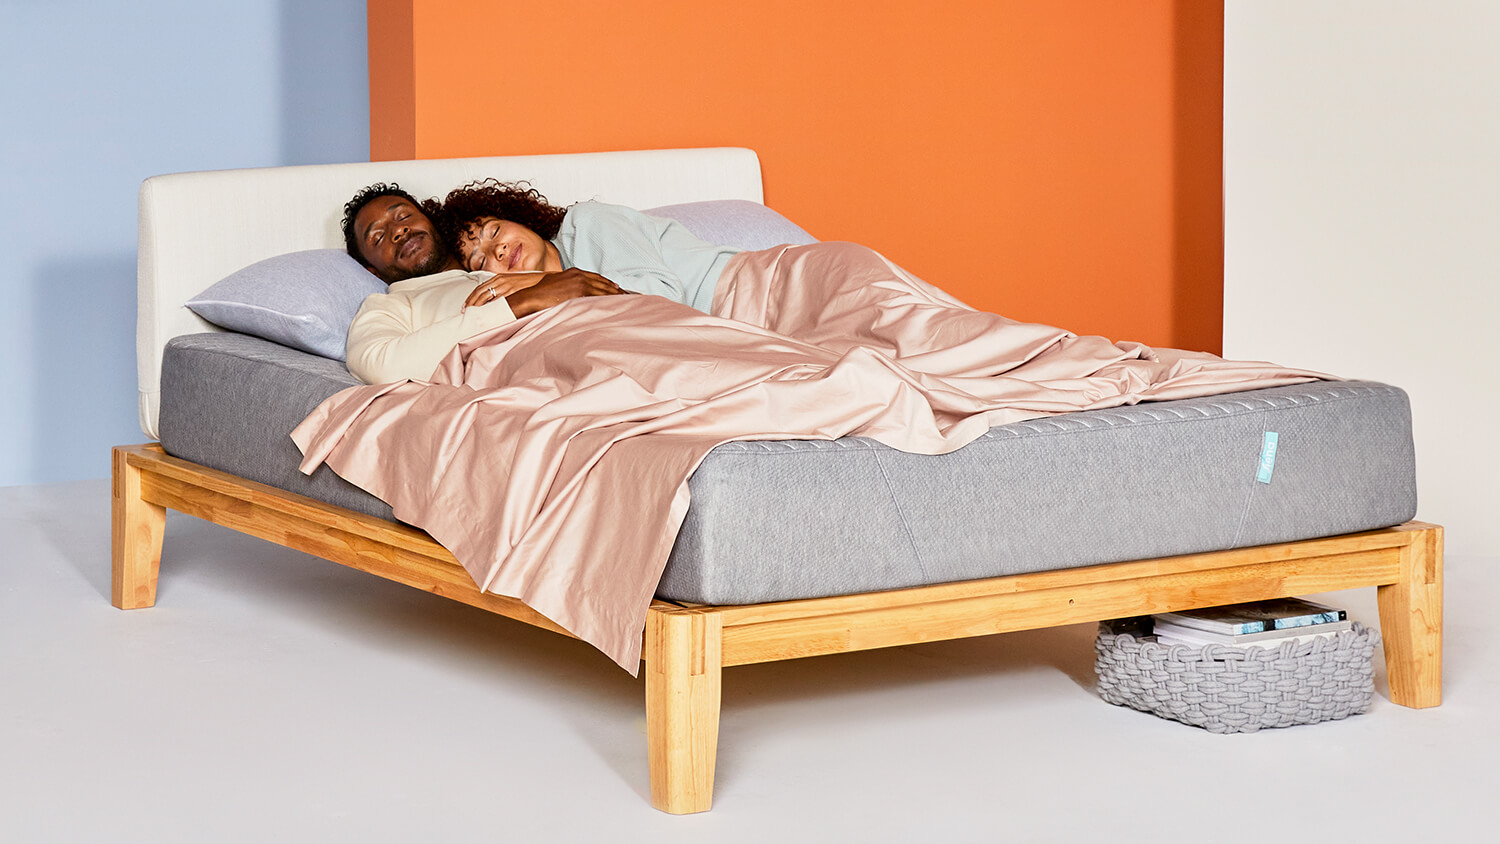  The Siena mattress offers a comfortable sleep surface